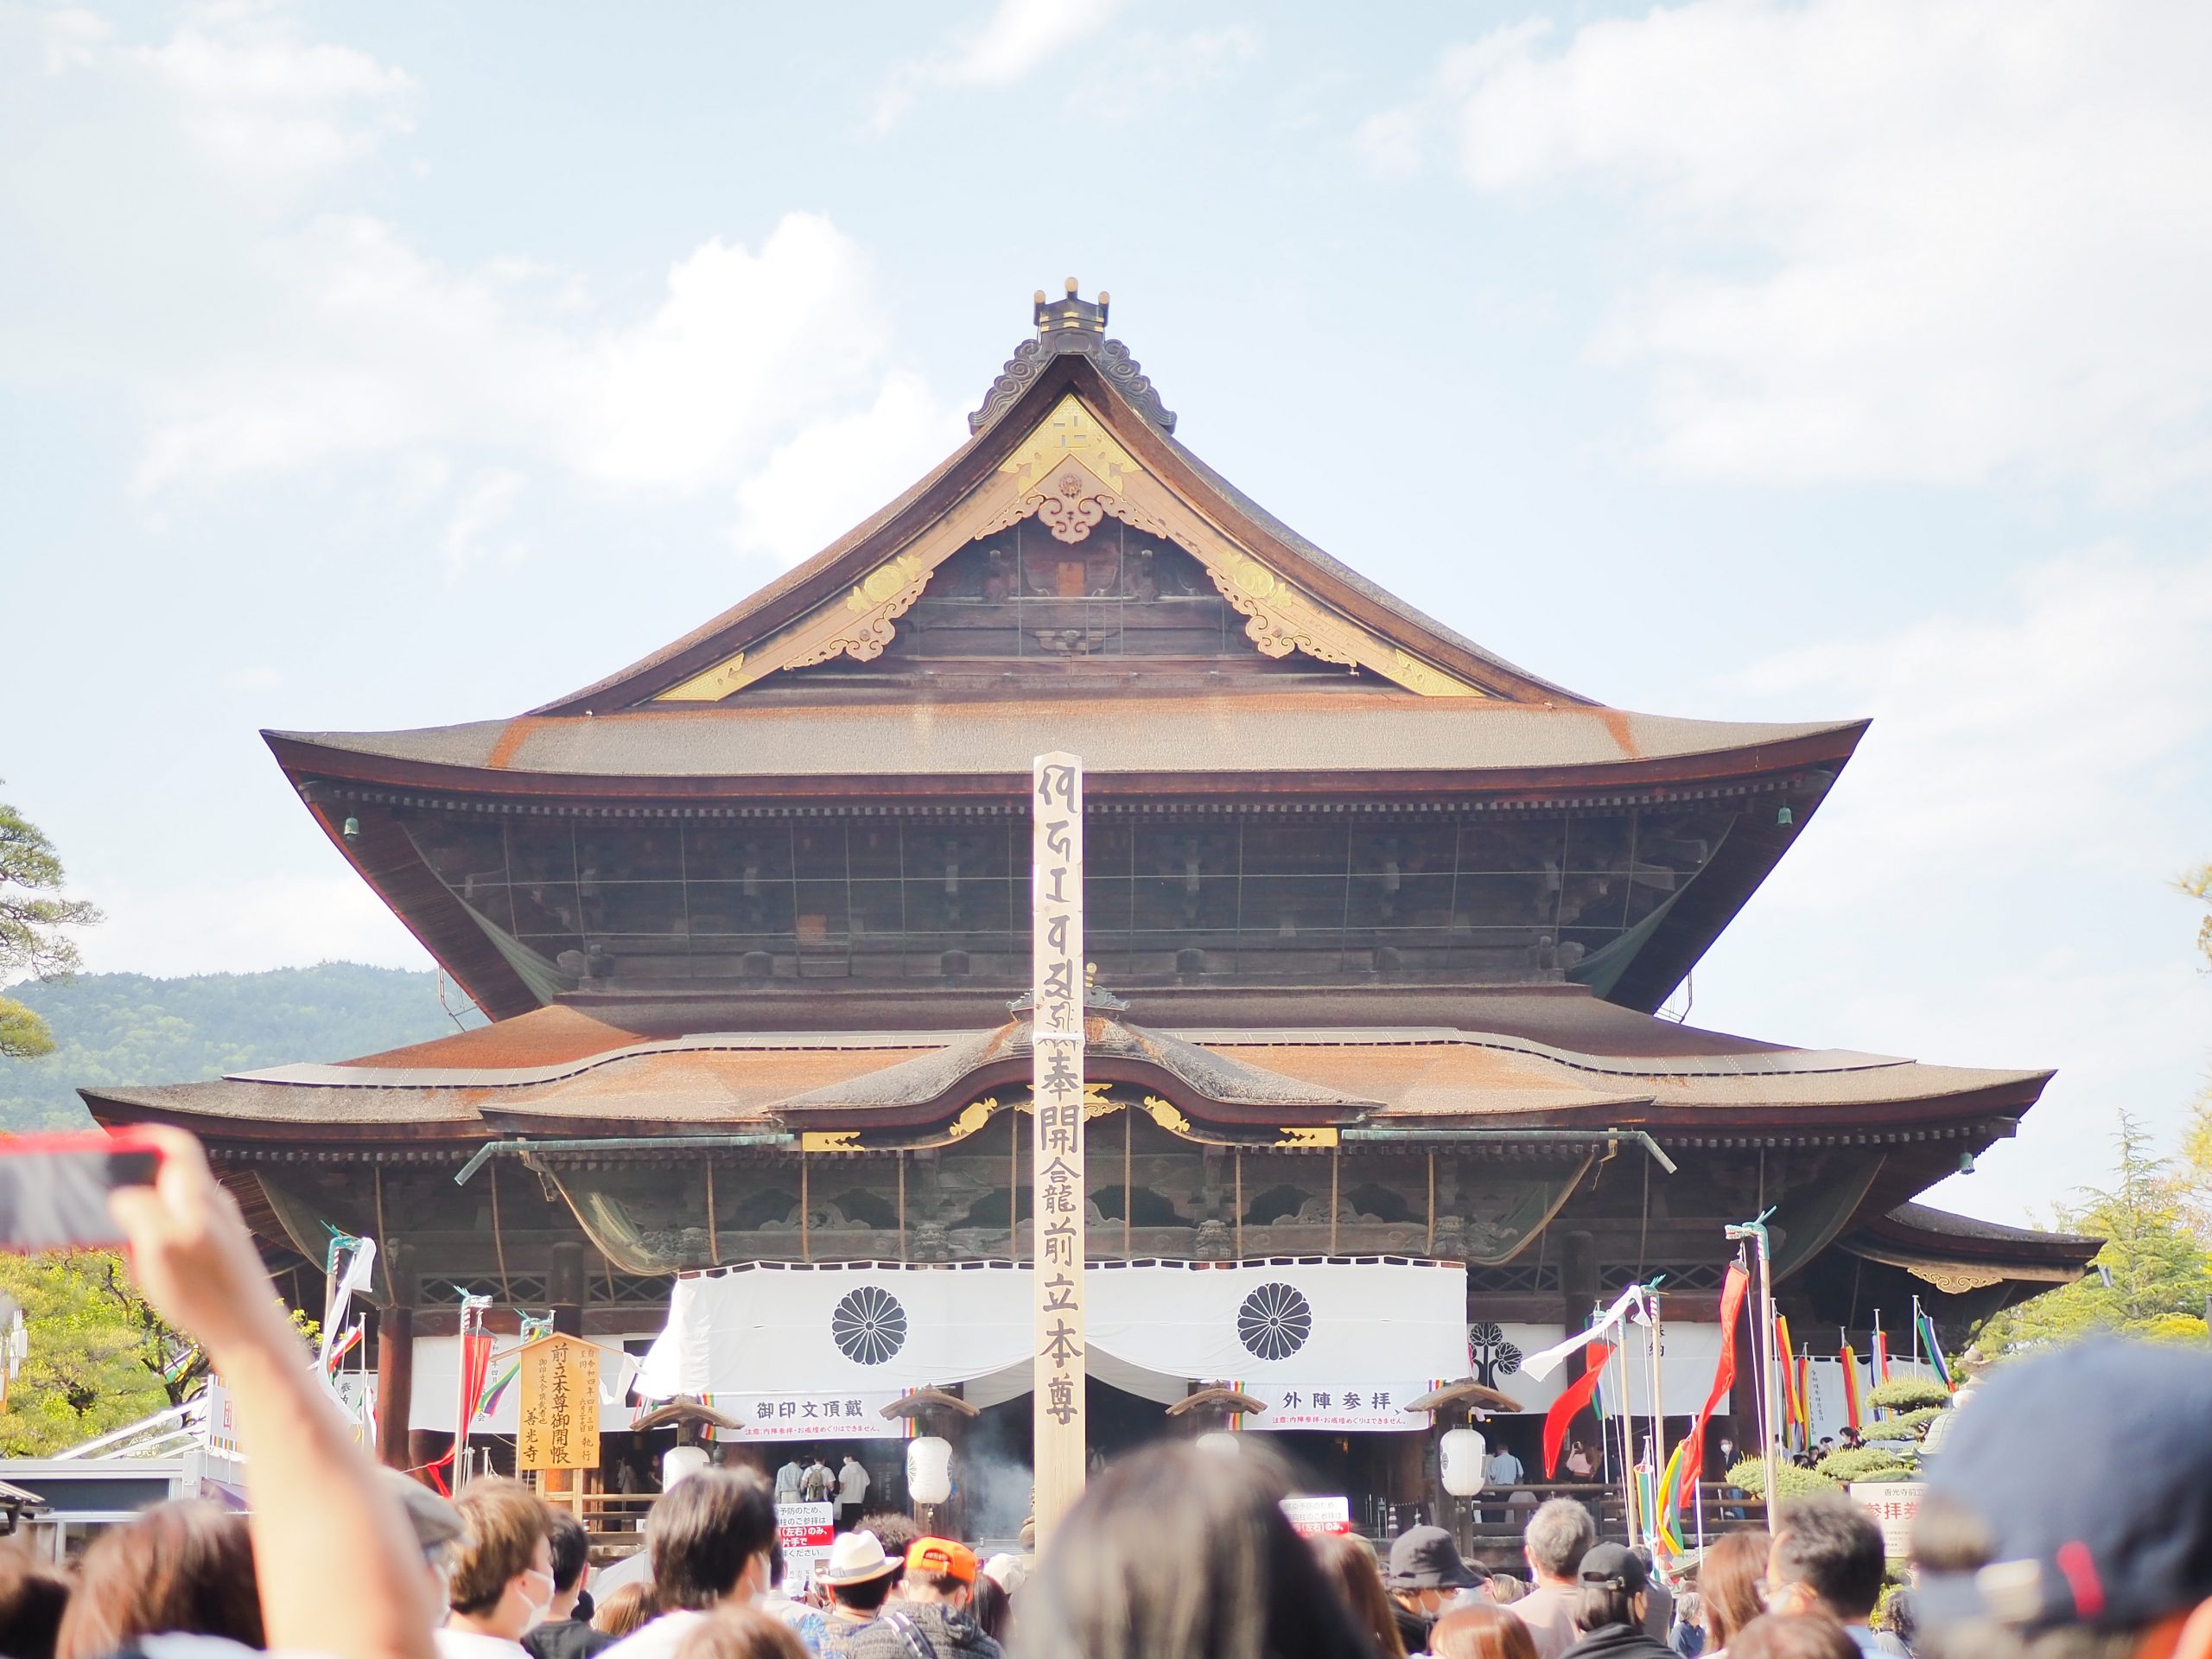 Zenkoji temple in Nagano with lots of visitors